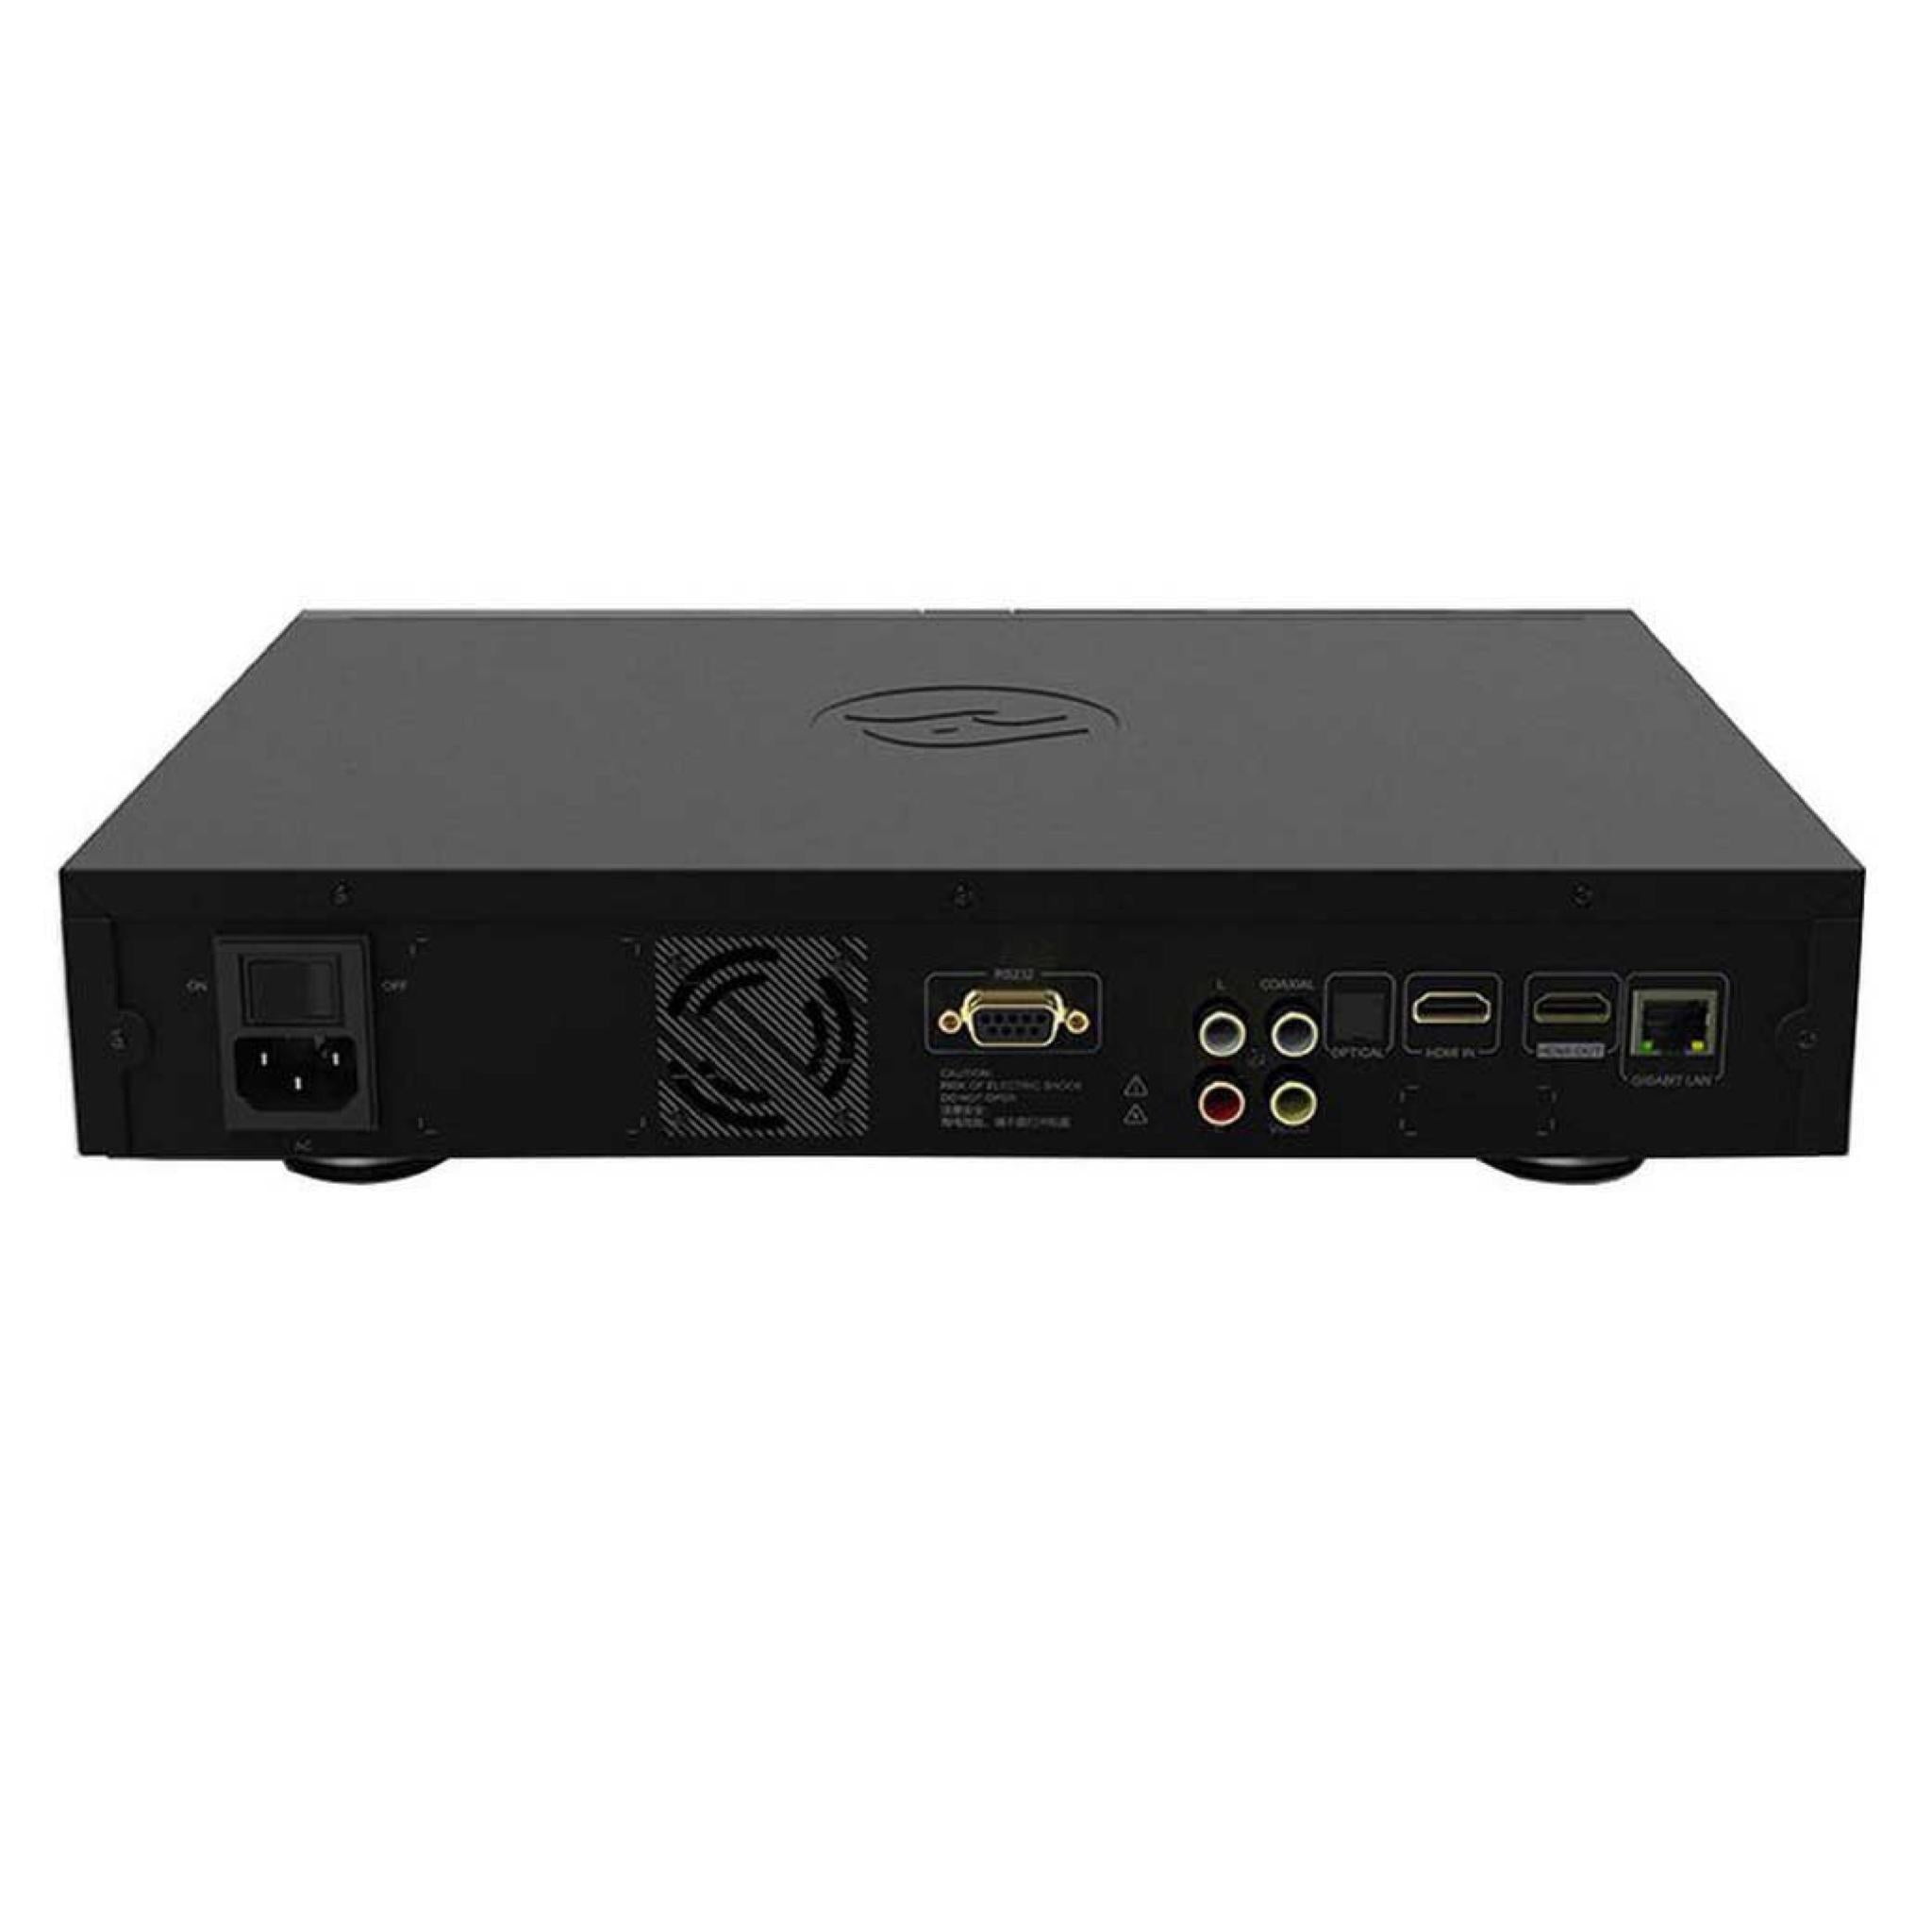 Zidoo Z1000 Pro - 4K HDR10+ Streaming Media Player - AVStore